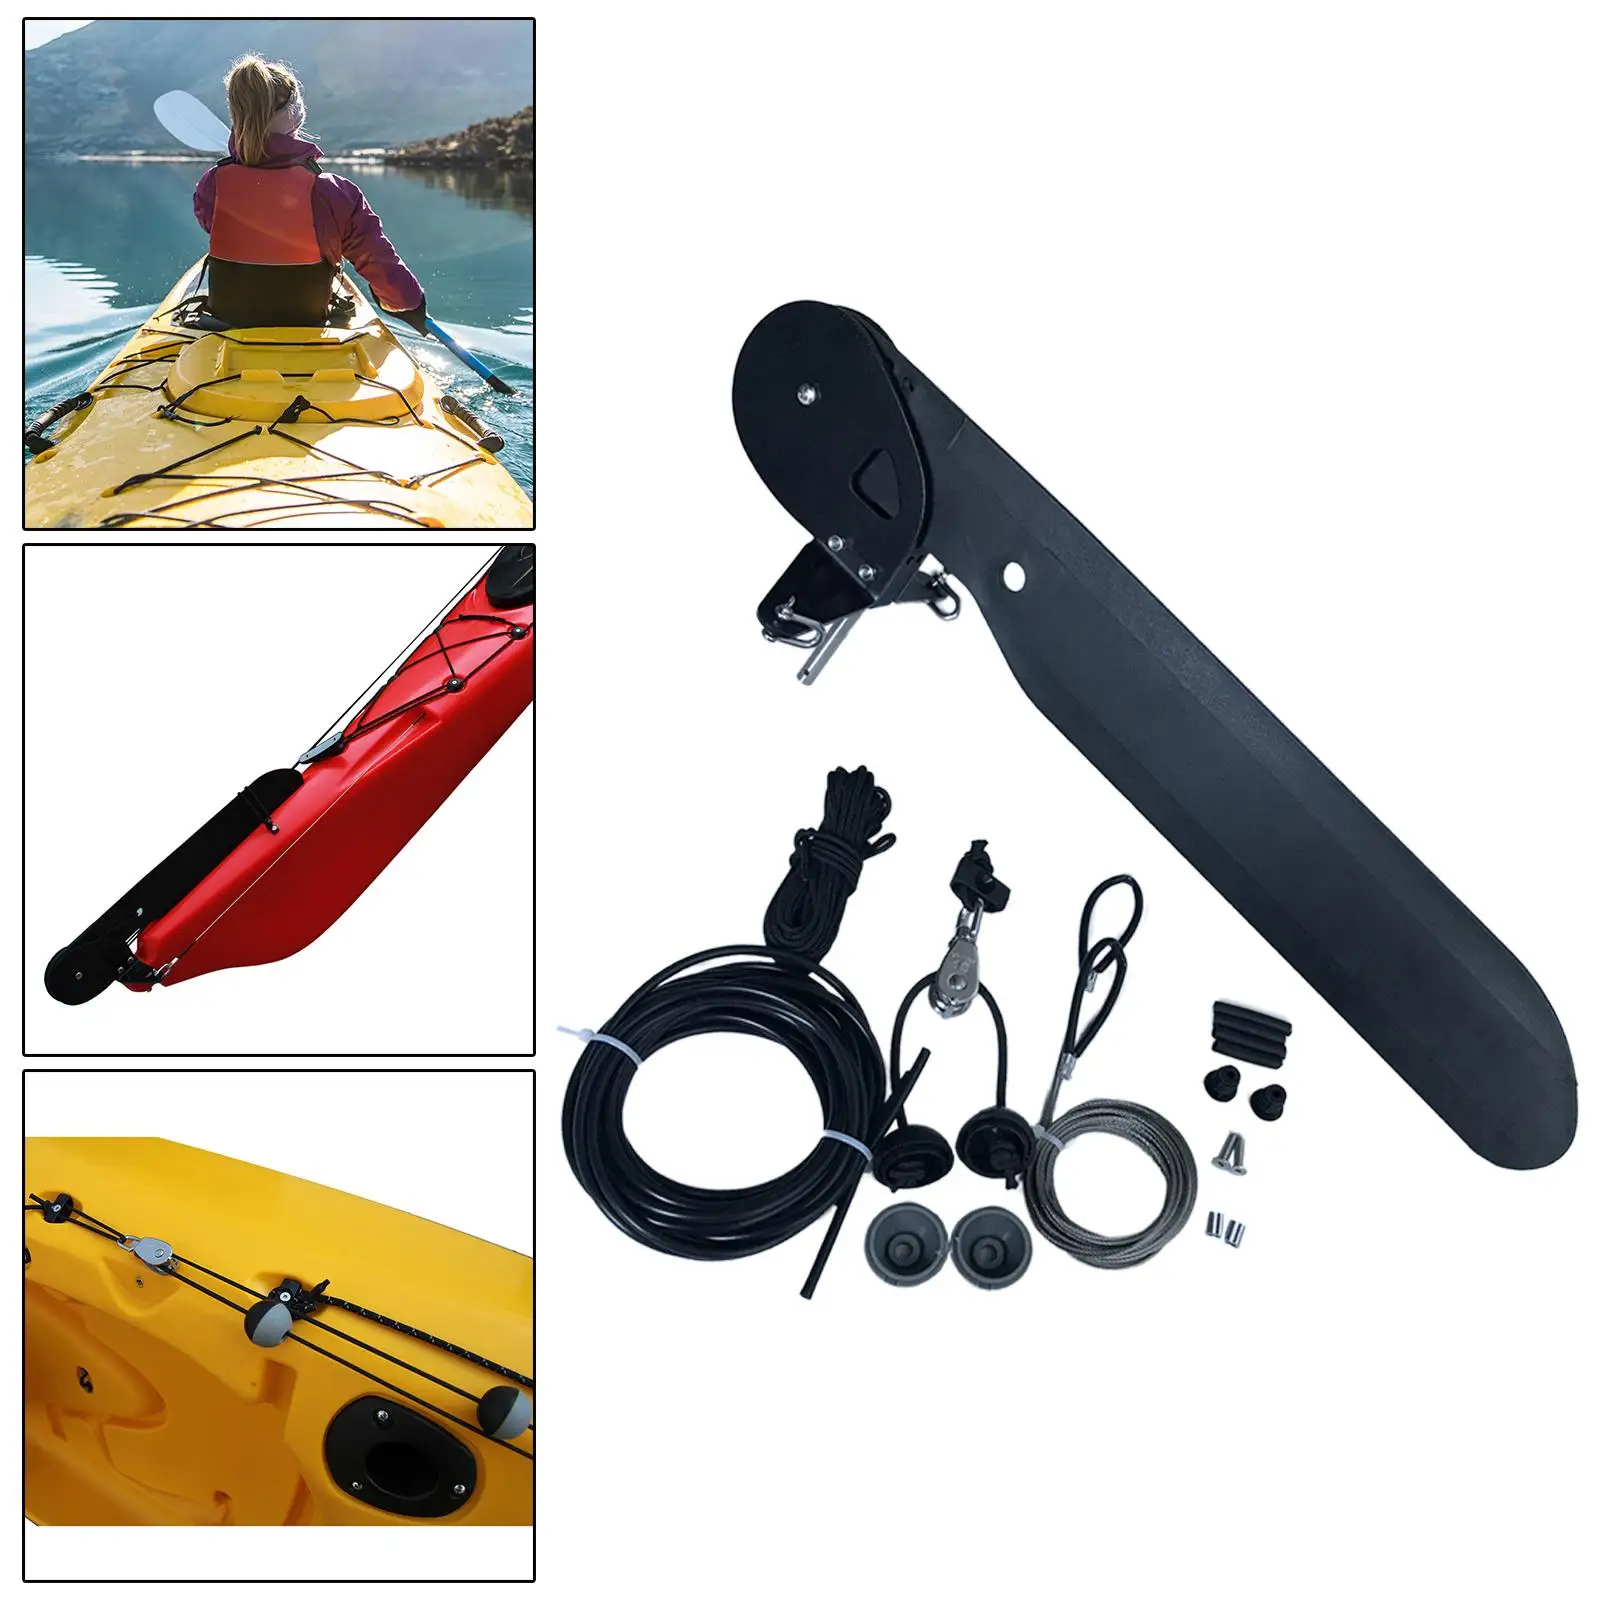 Nylon Kayak Boat Rudder Adjustable Black Foot Control Direction for Canoe Rear Tail Fishing Boat Parts